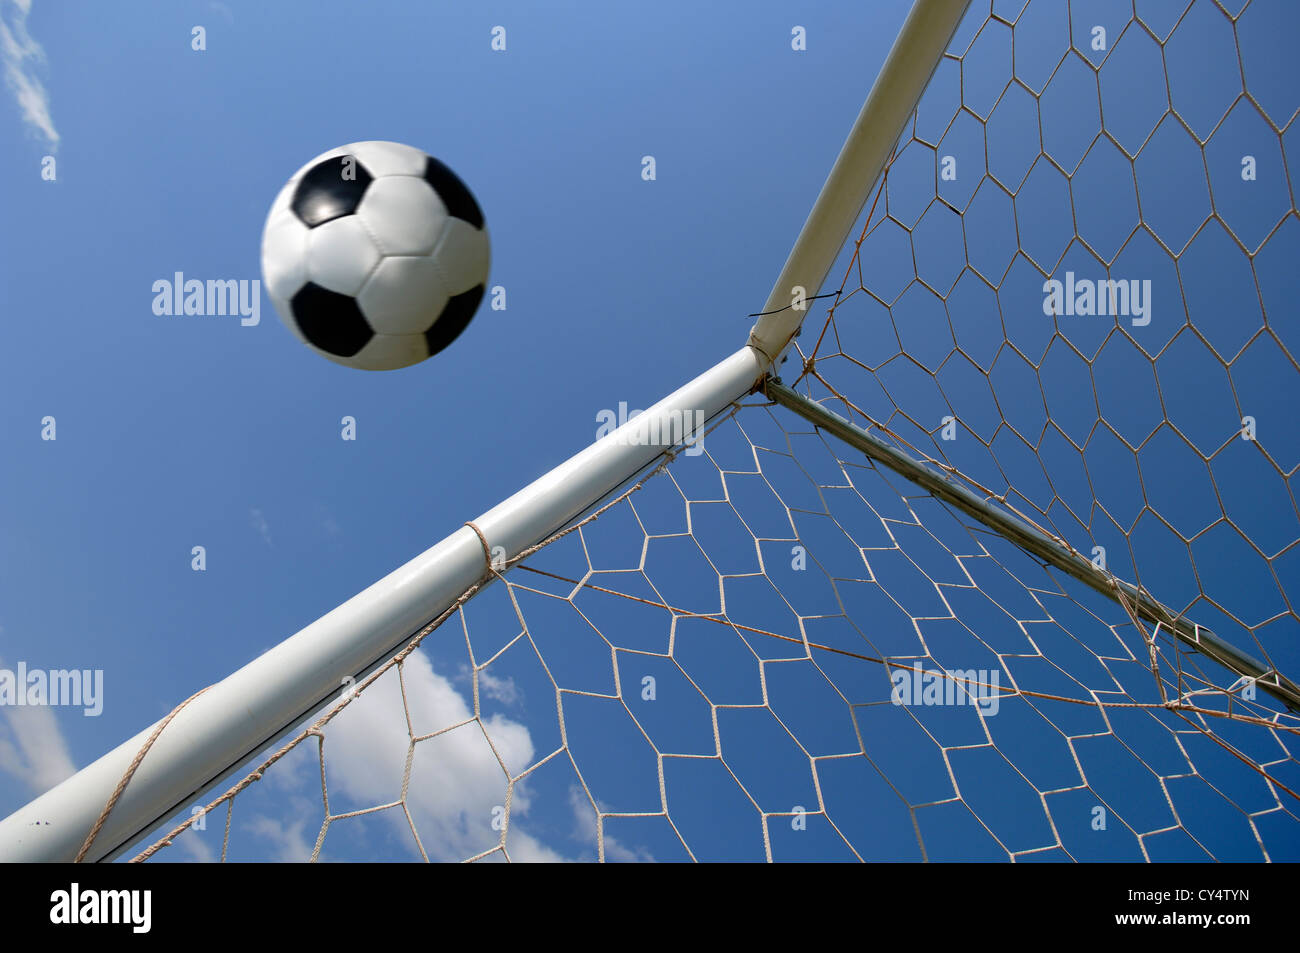 Fußball - Fußball-Ball im Tor gegen blauen Himmel Stockfoto